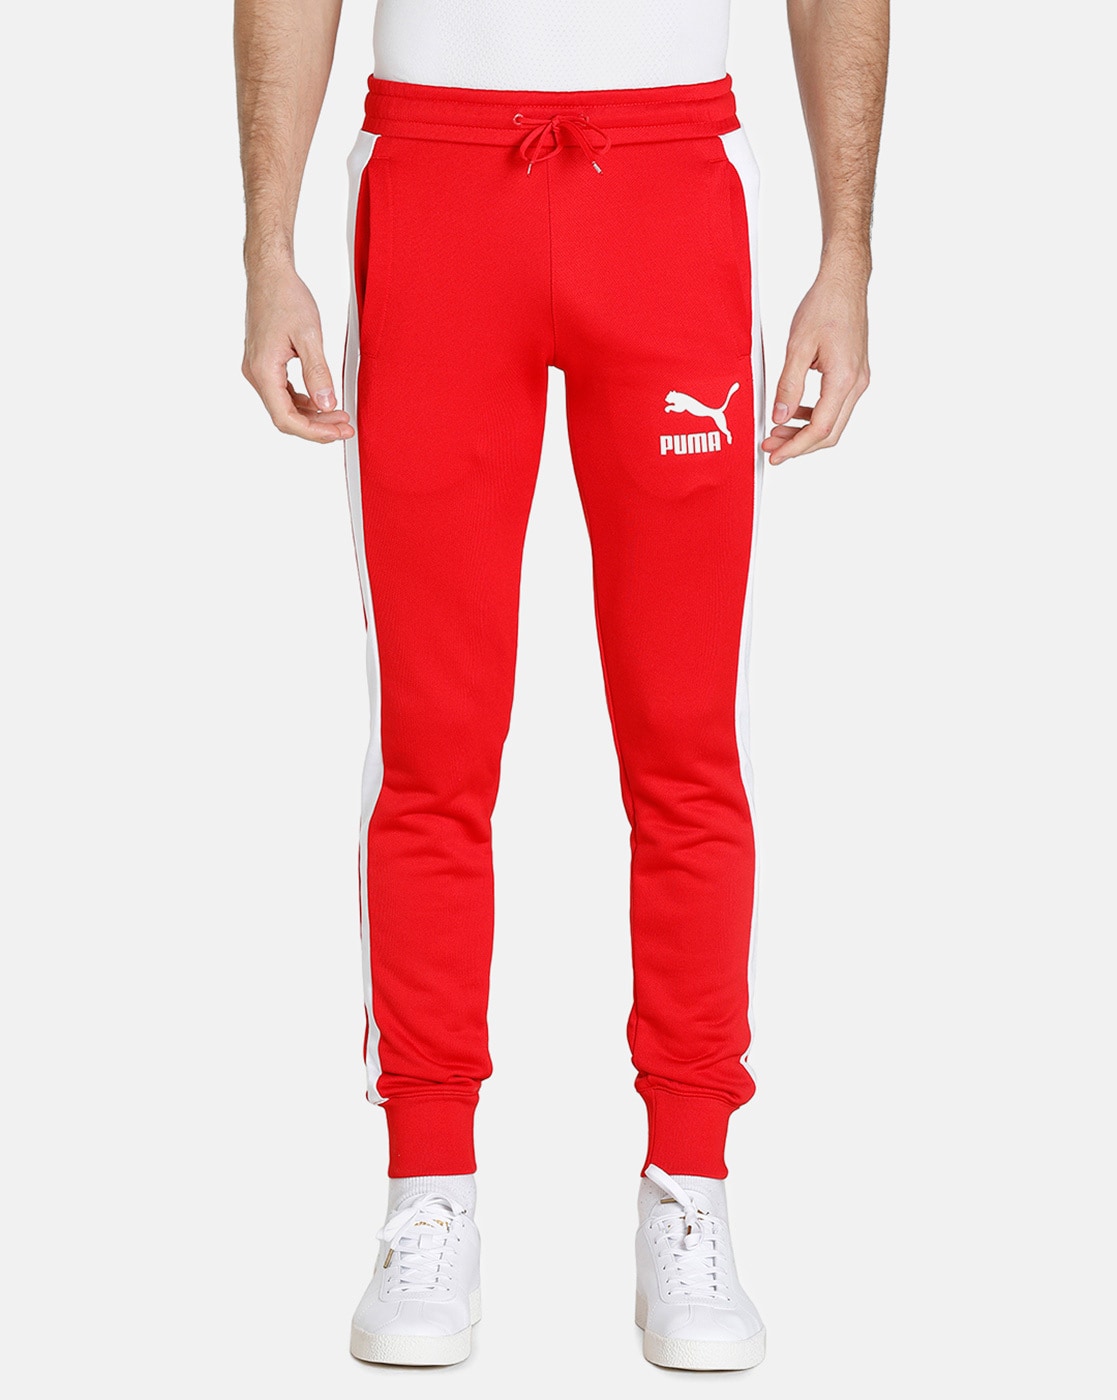 Mens Red Track  Field Pants  Tights Nikecom